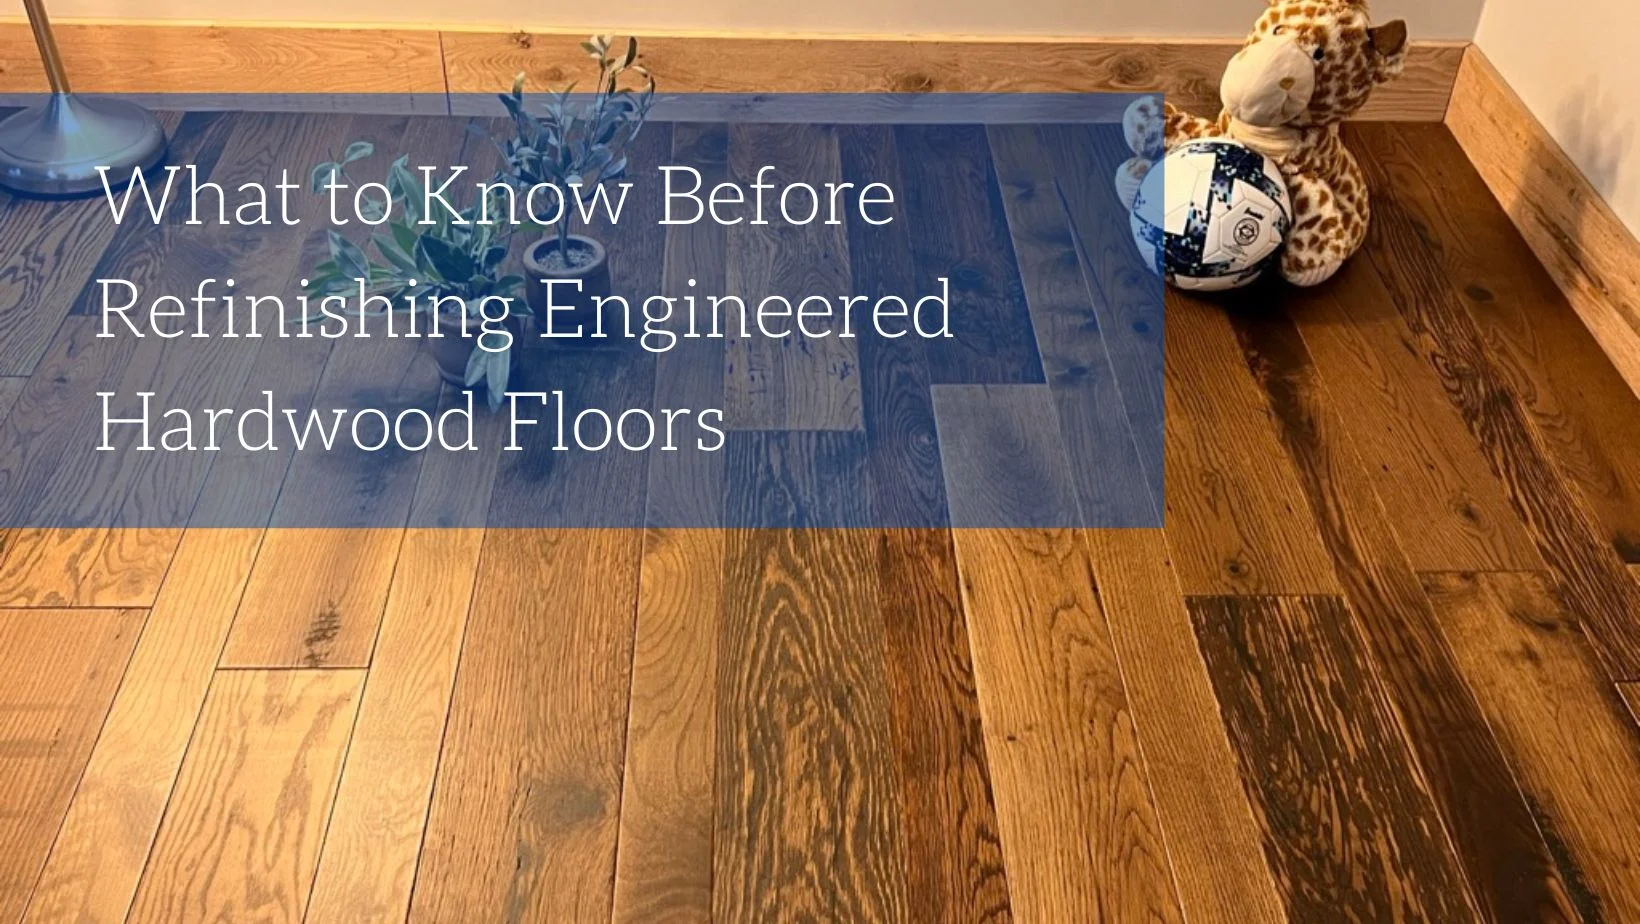 Refinishing Engineered Hardwood Floors